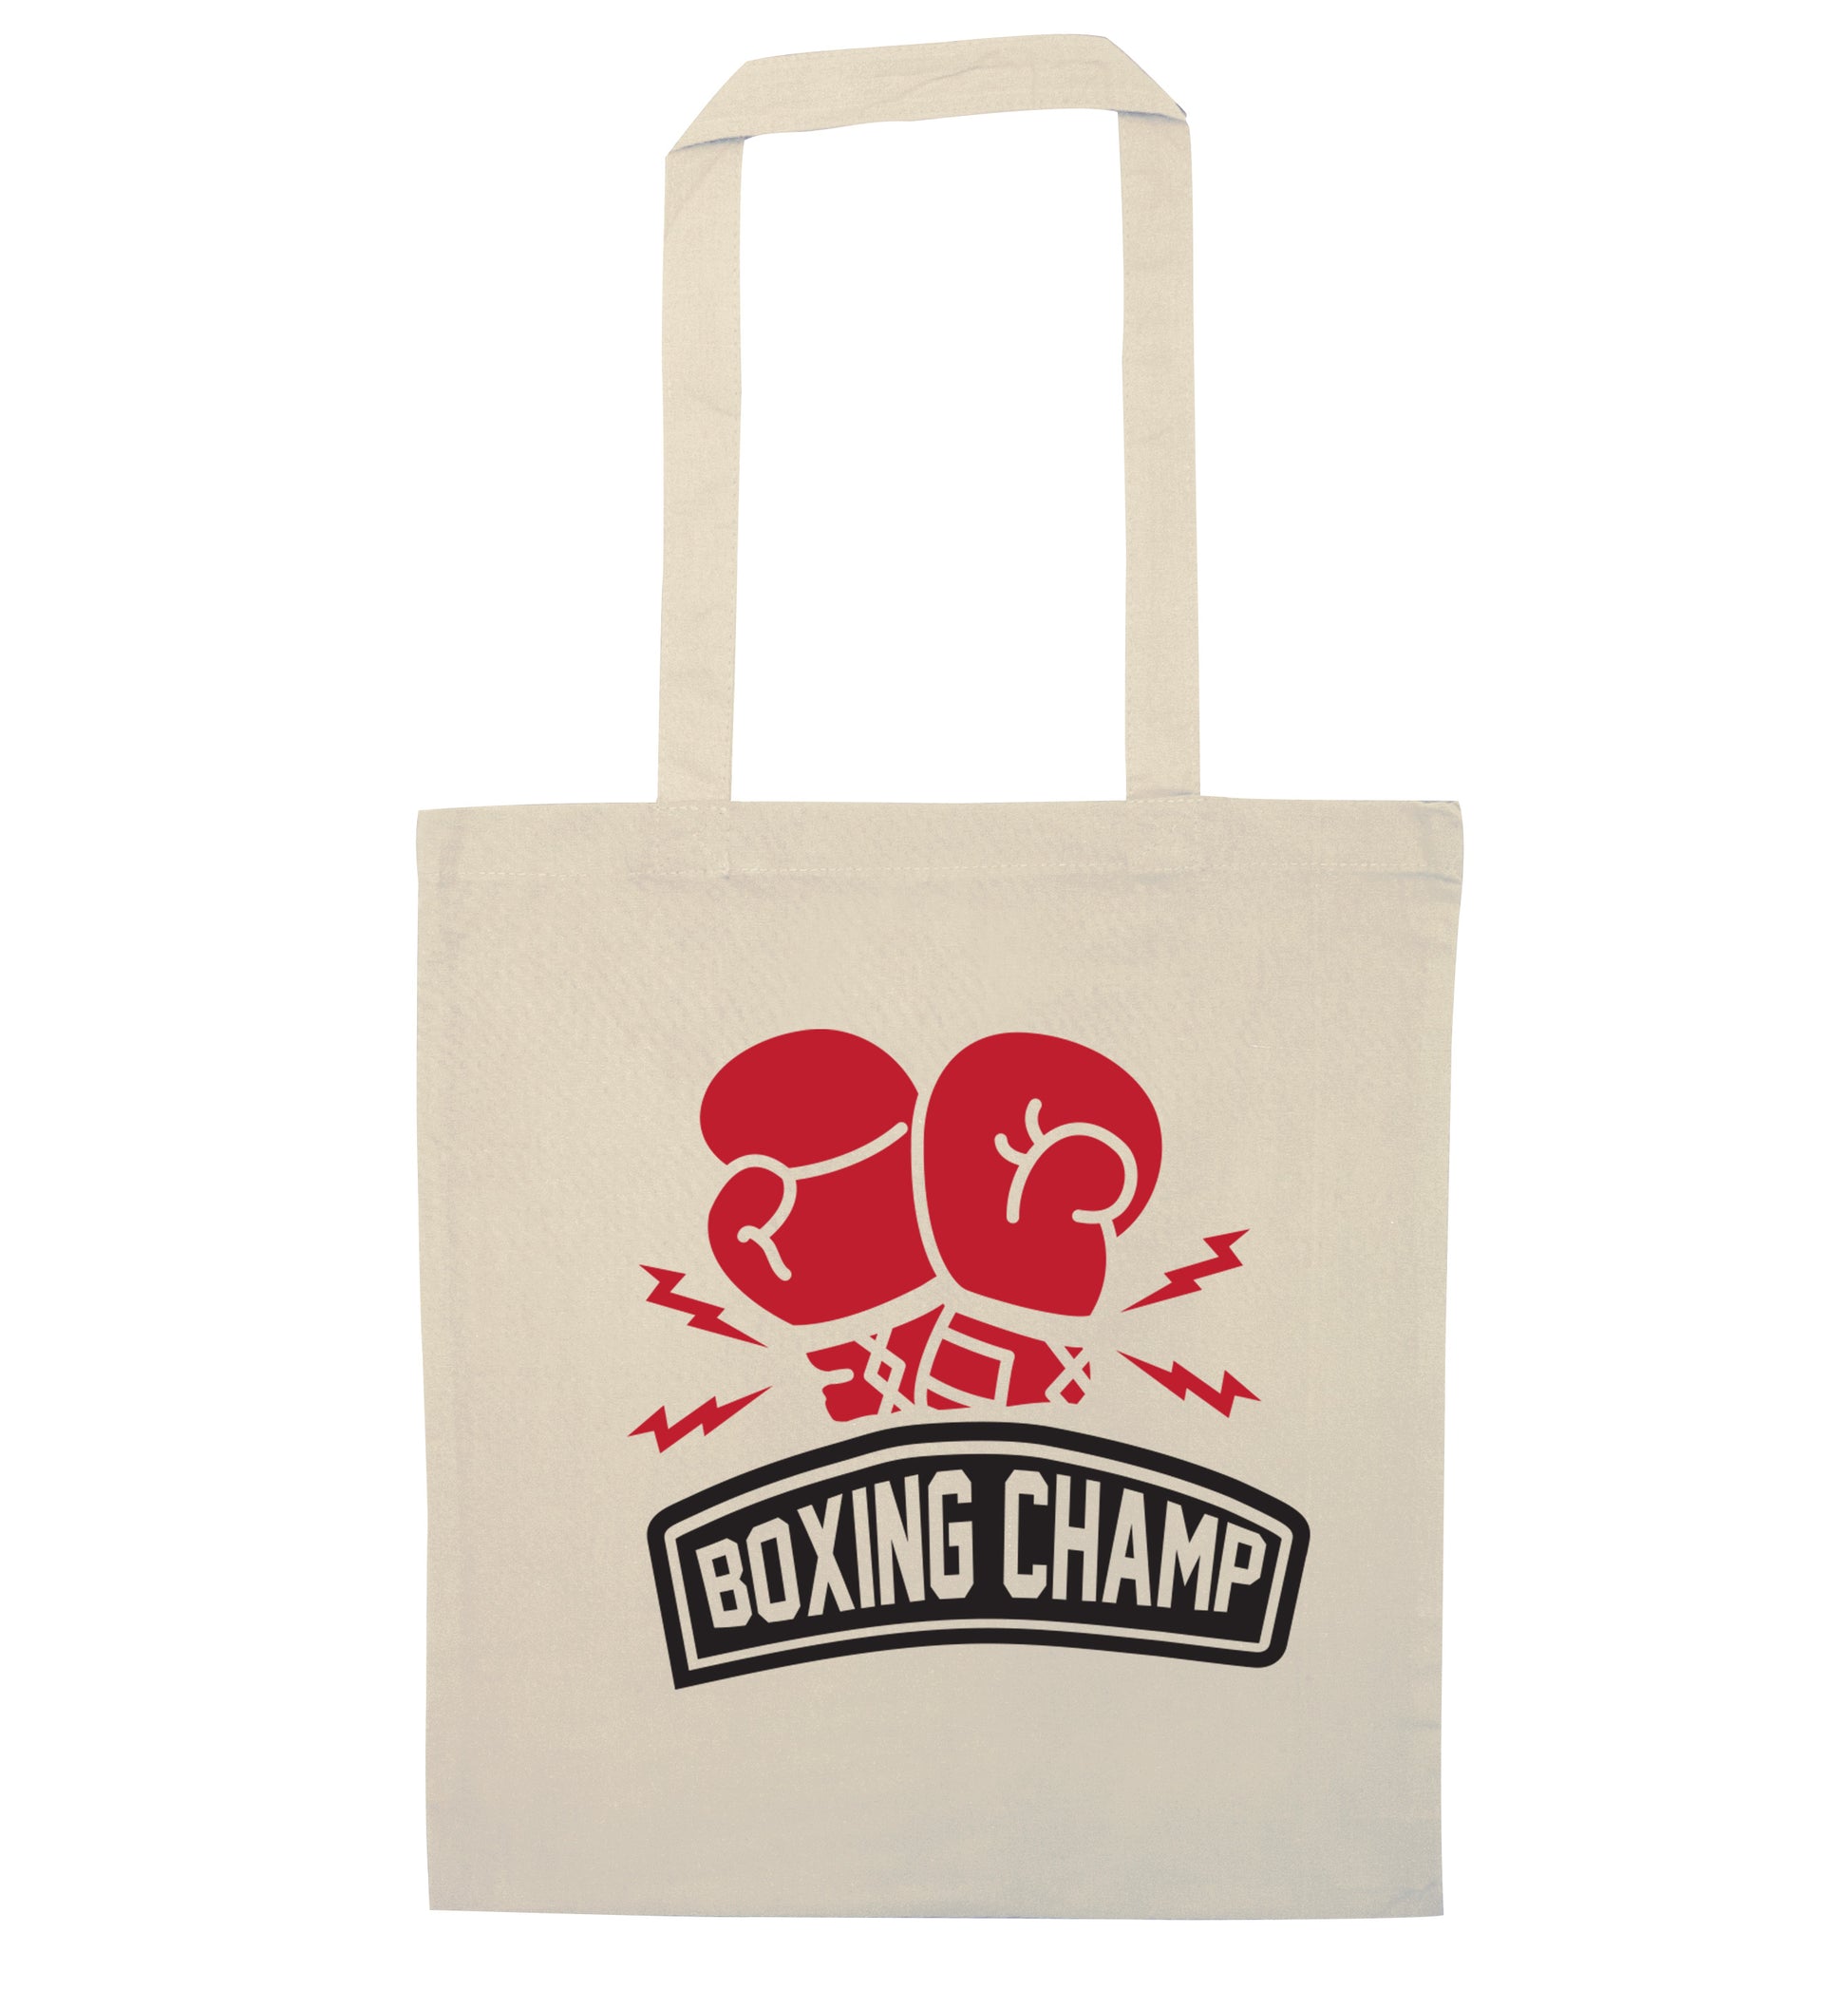 Boxing Champ natural tote bag